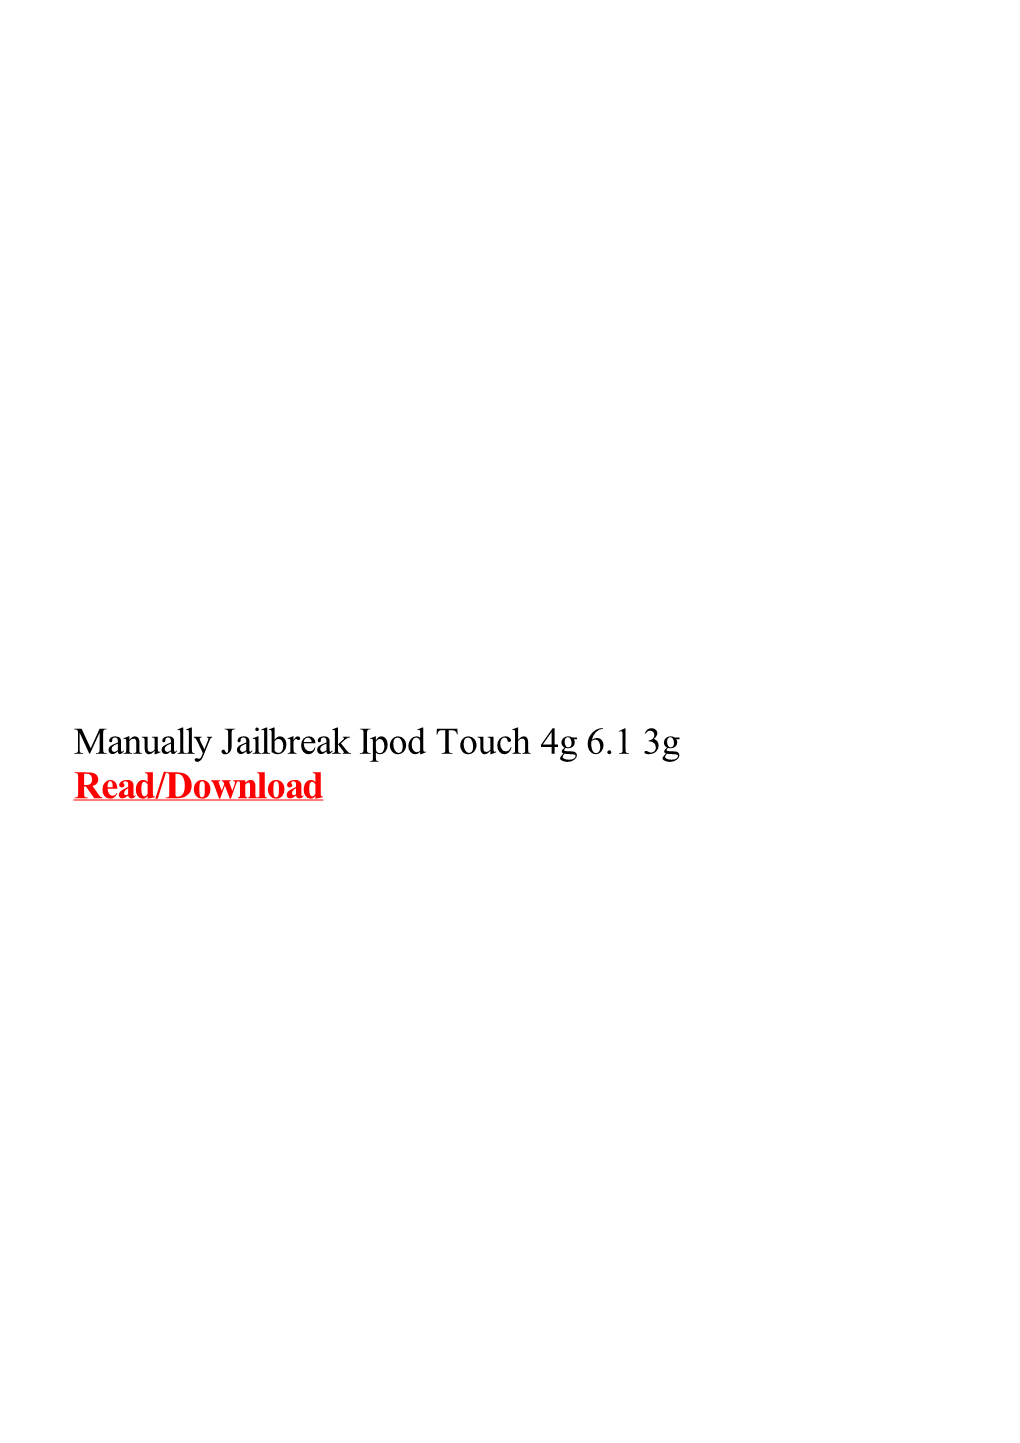 Manually Jailbreak Ipod Touch 4G 6.1 3G.Pdf